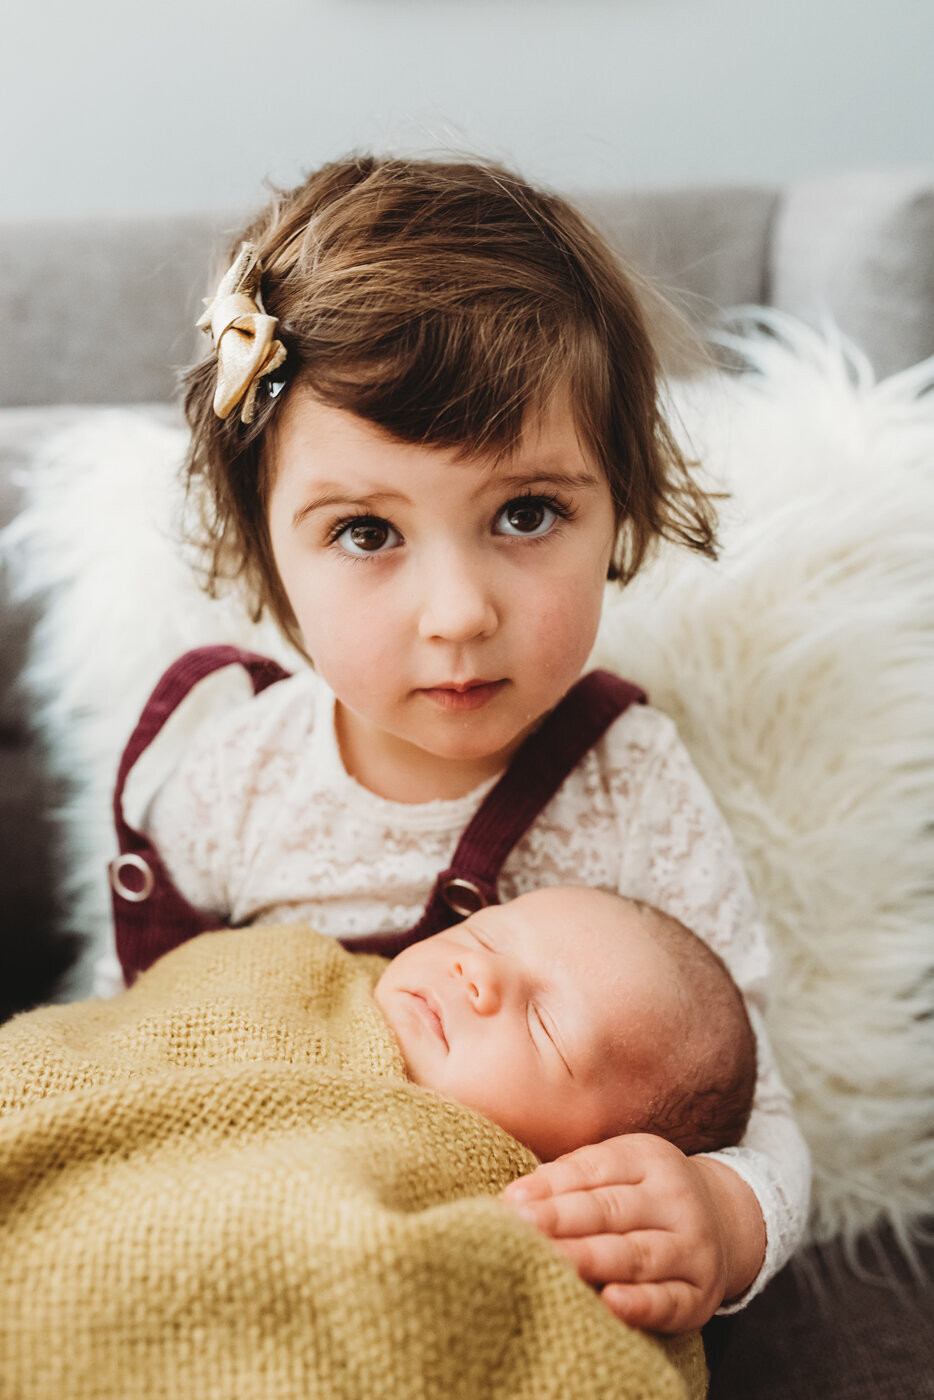 Baby girl holding her newborn baby brother